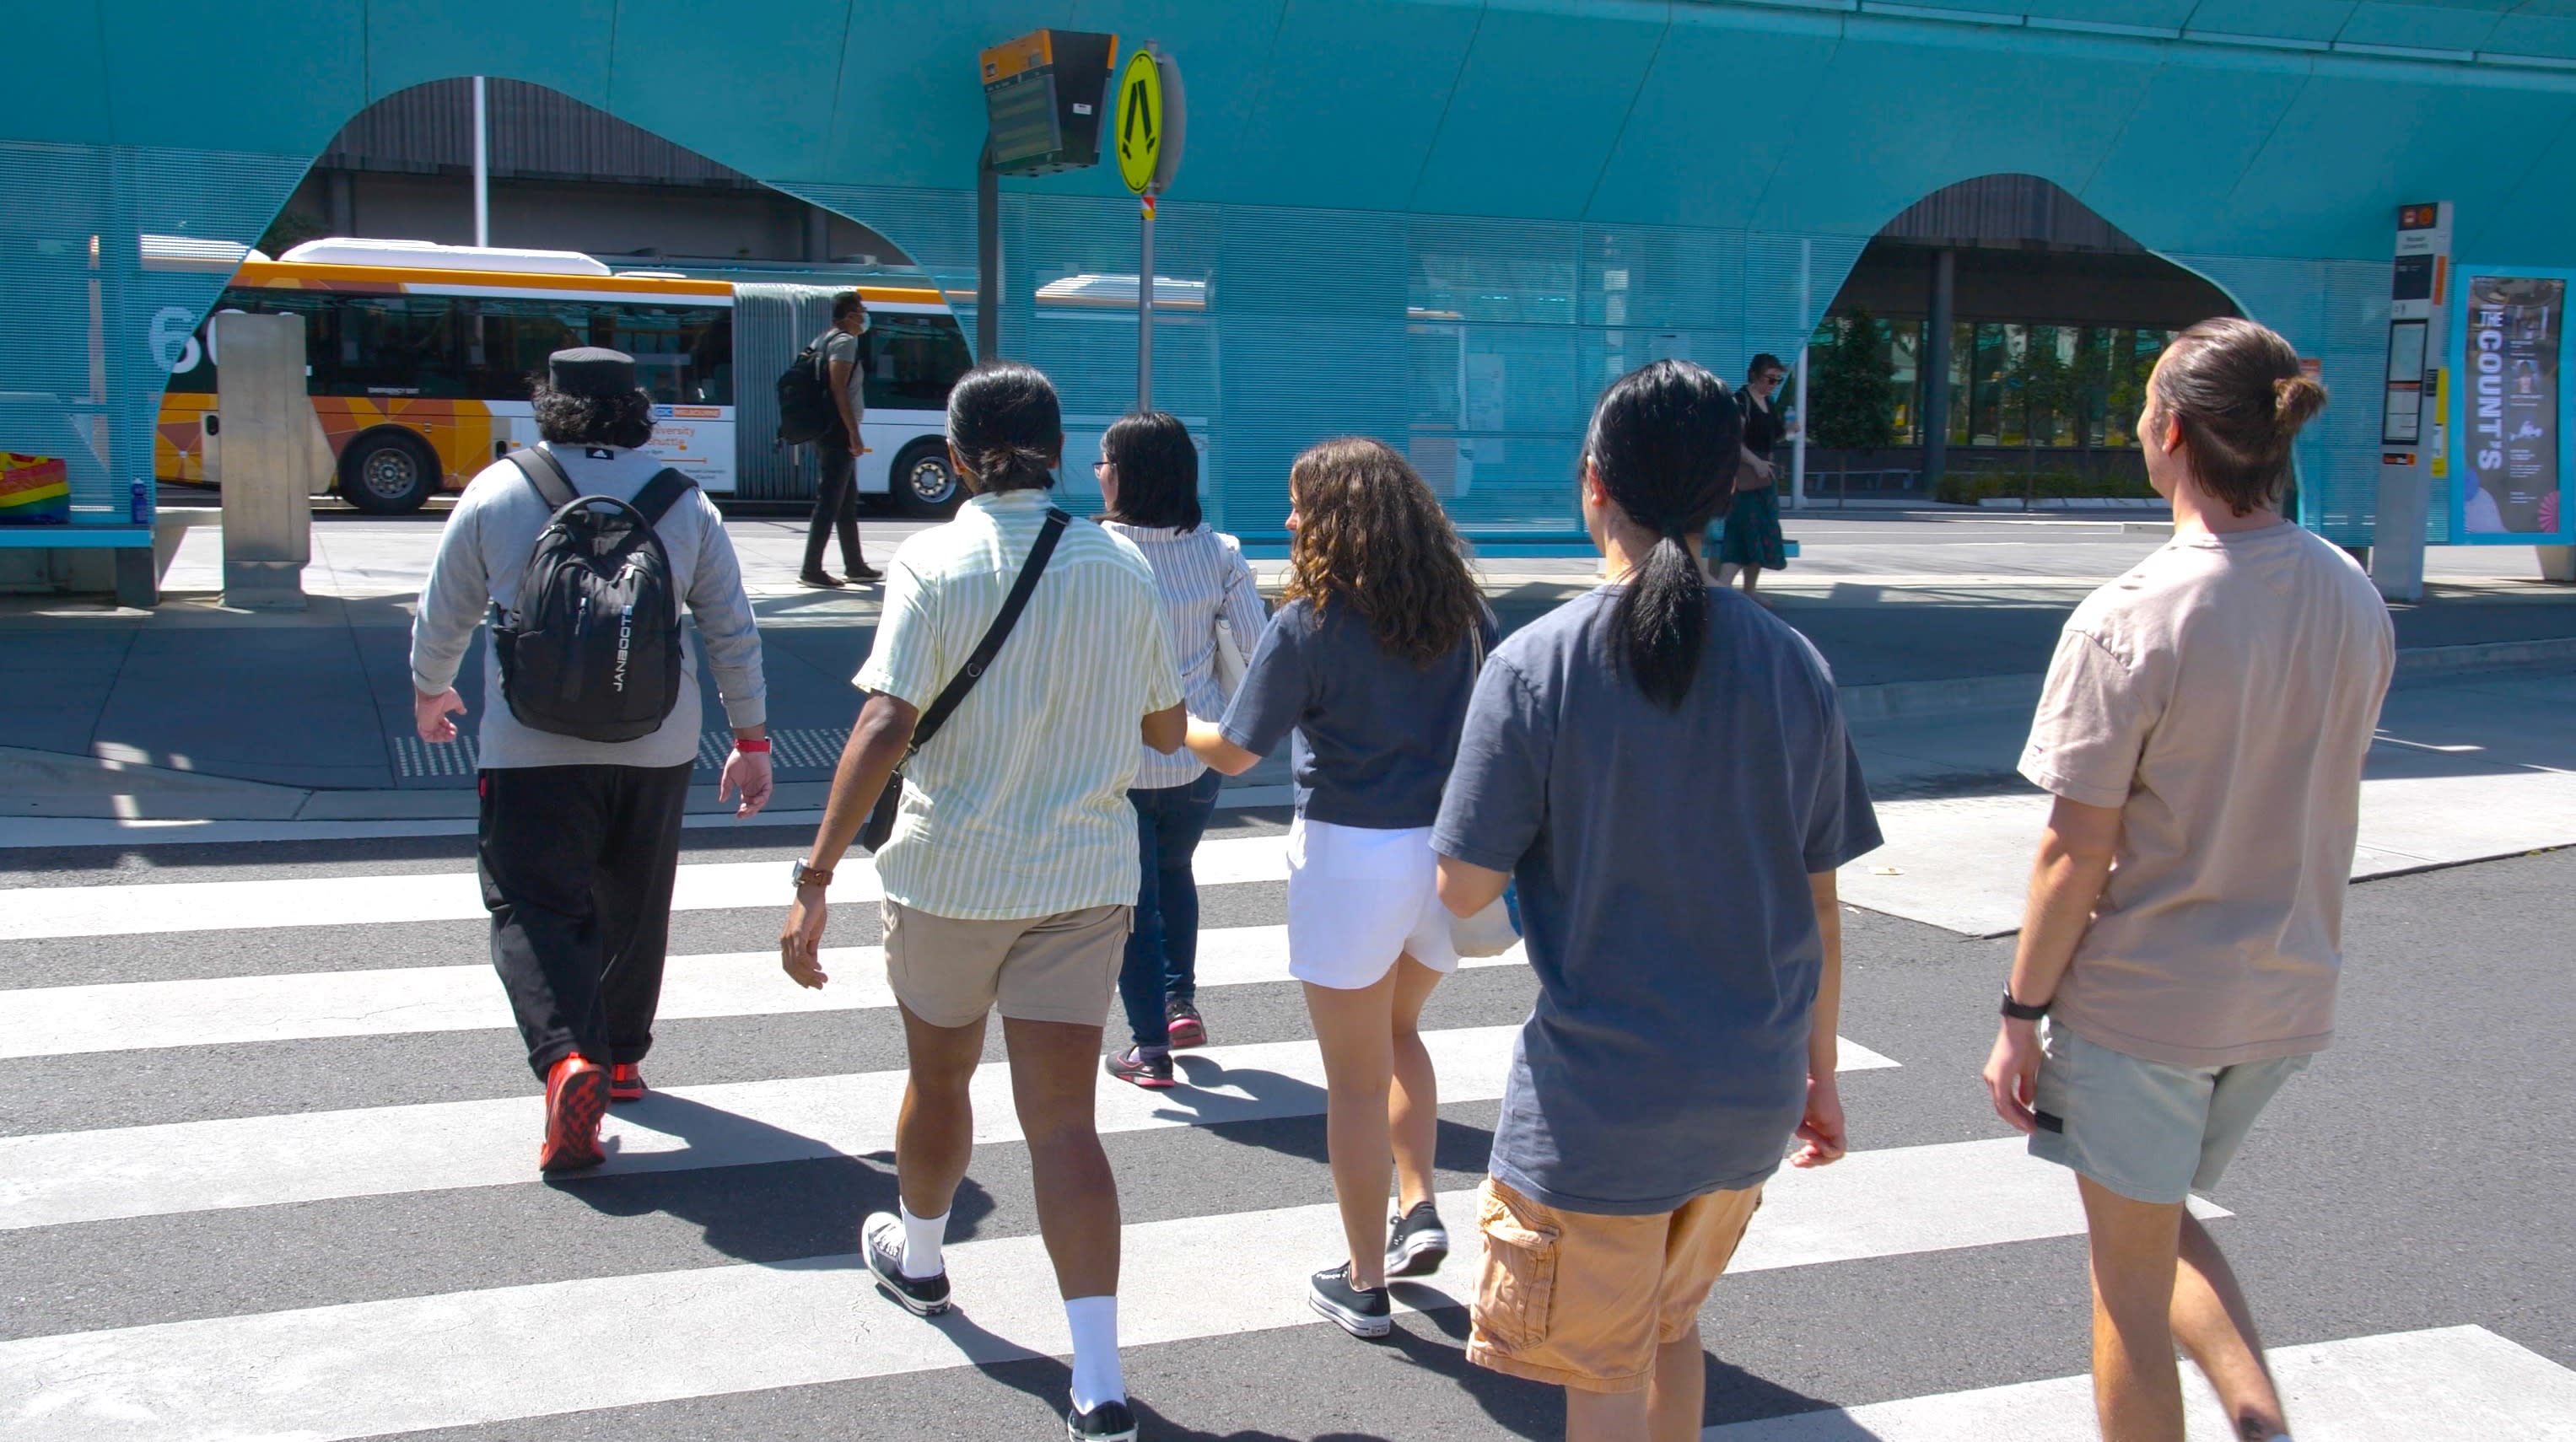 Students walk across a zebra crossing on their way to Monash University campus.